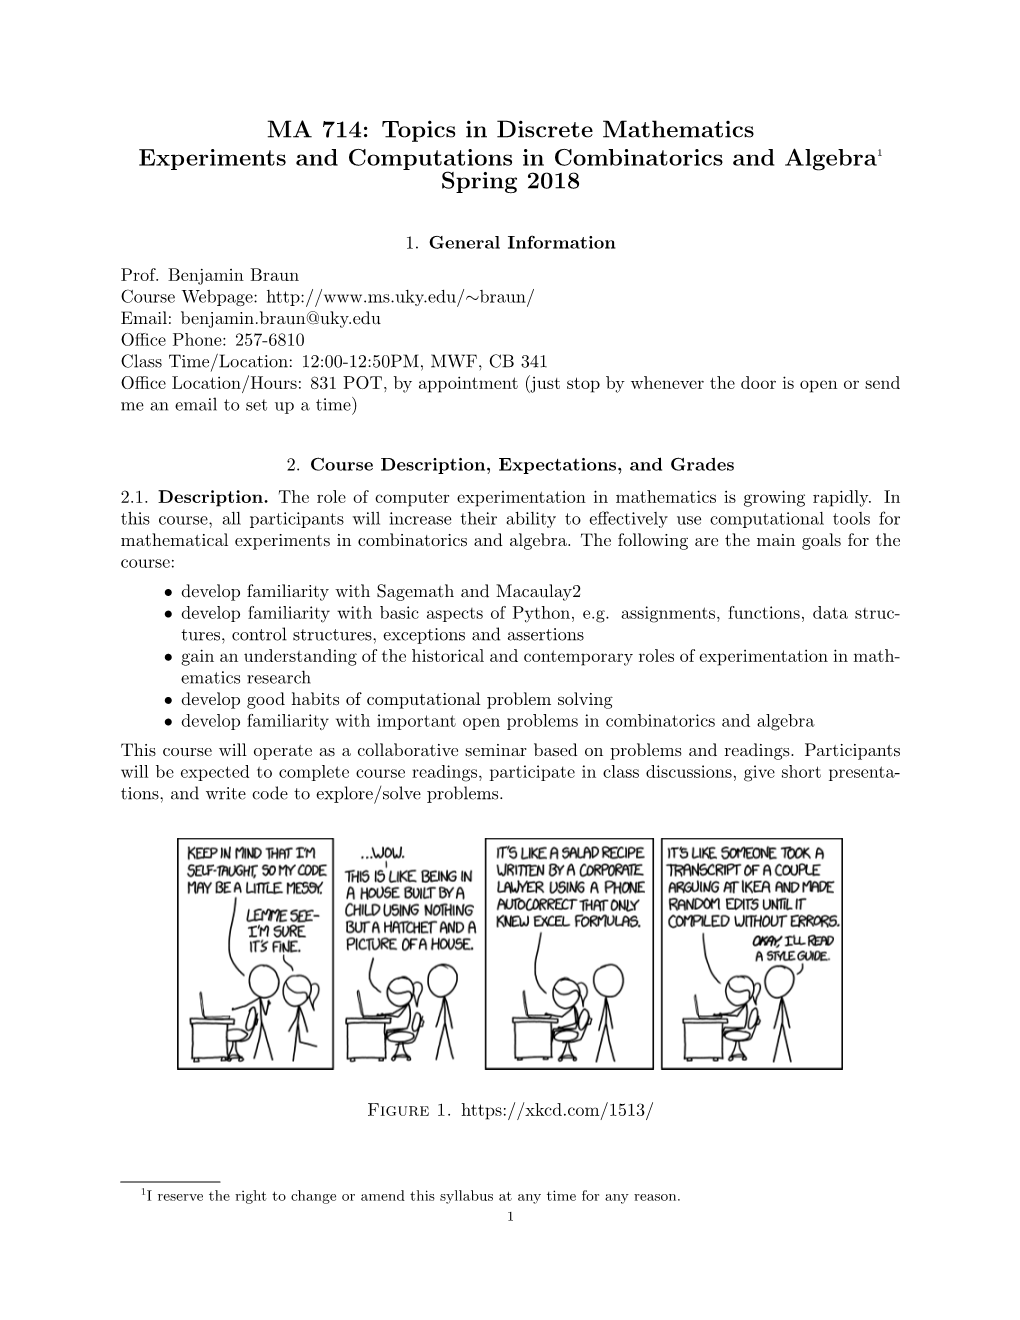 MA 714: Topics in Discrete Mathematics Experiments and Computations in Combinatorics and Algebra1 Spring 2018